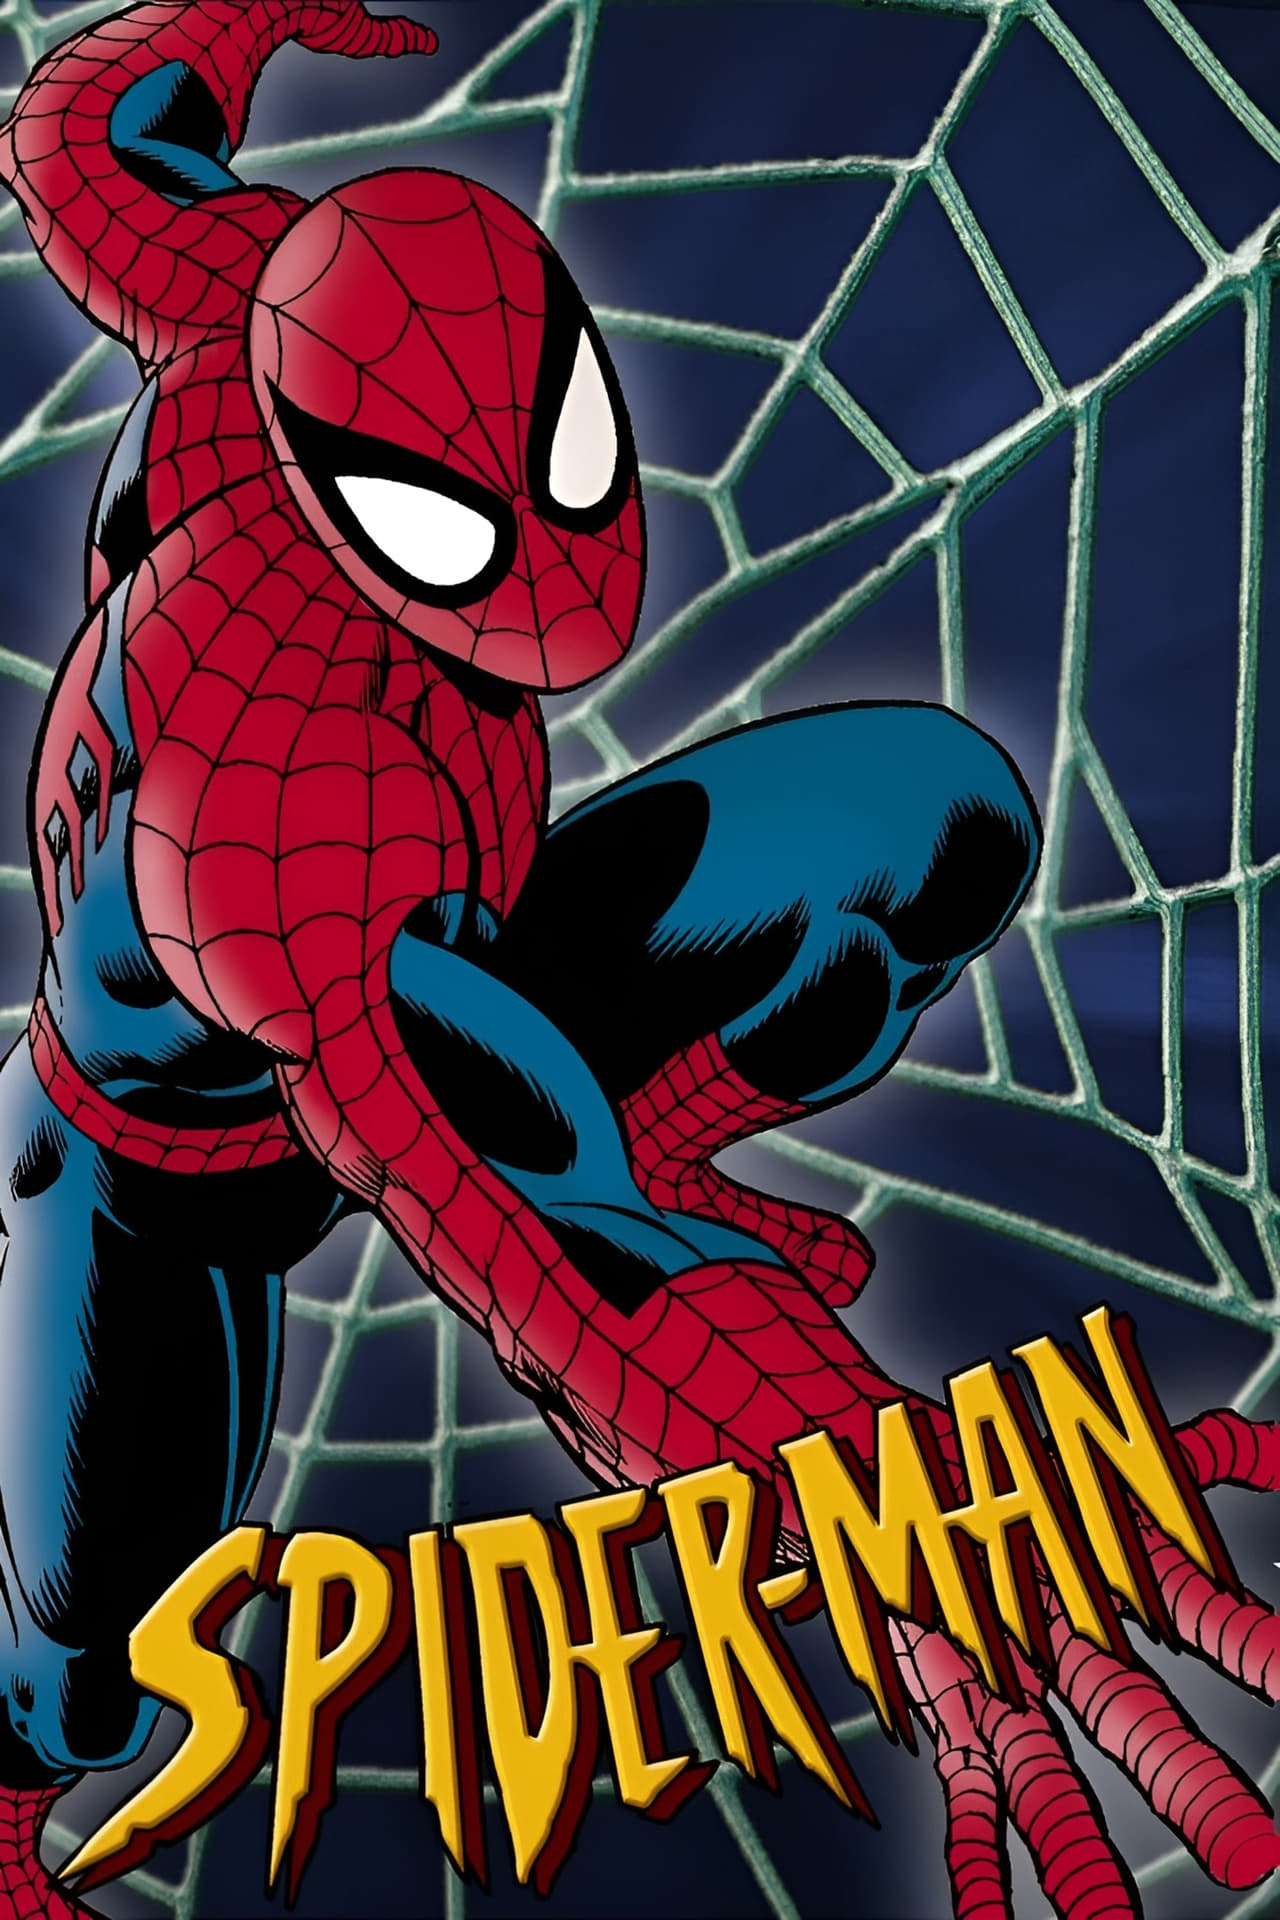 Spider-Man (1994) S1 EP01&EP13 128Kbps 23.976Fps 48Khz 2.0Ch Disney+ DD+ E-AC3 Turkish Audio TAC